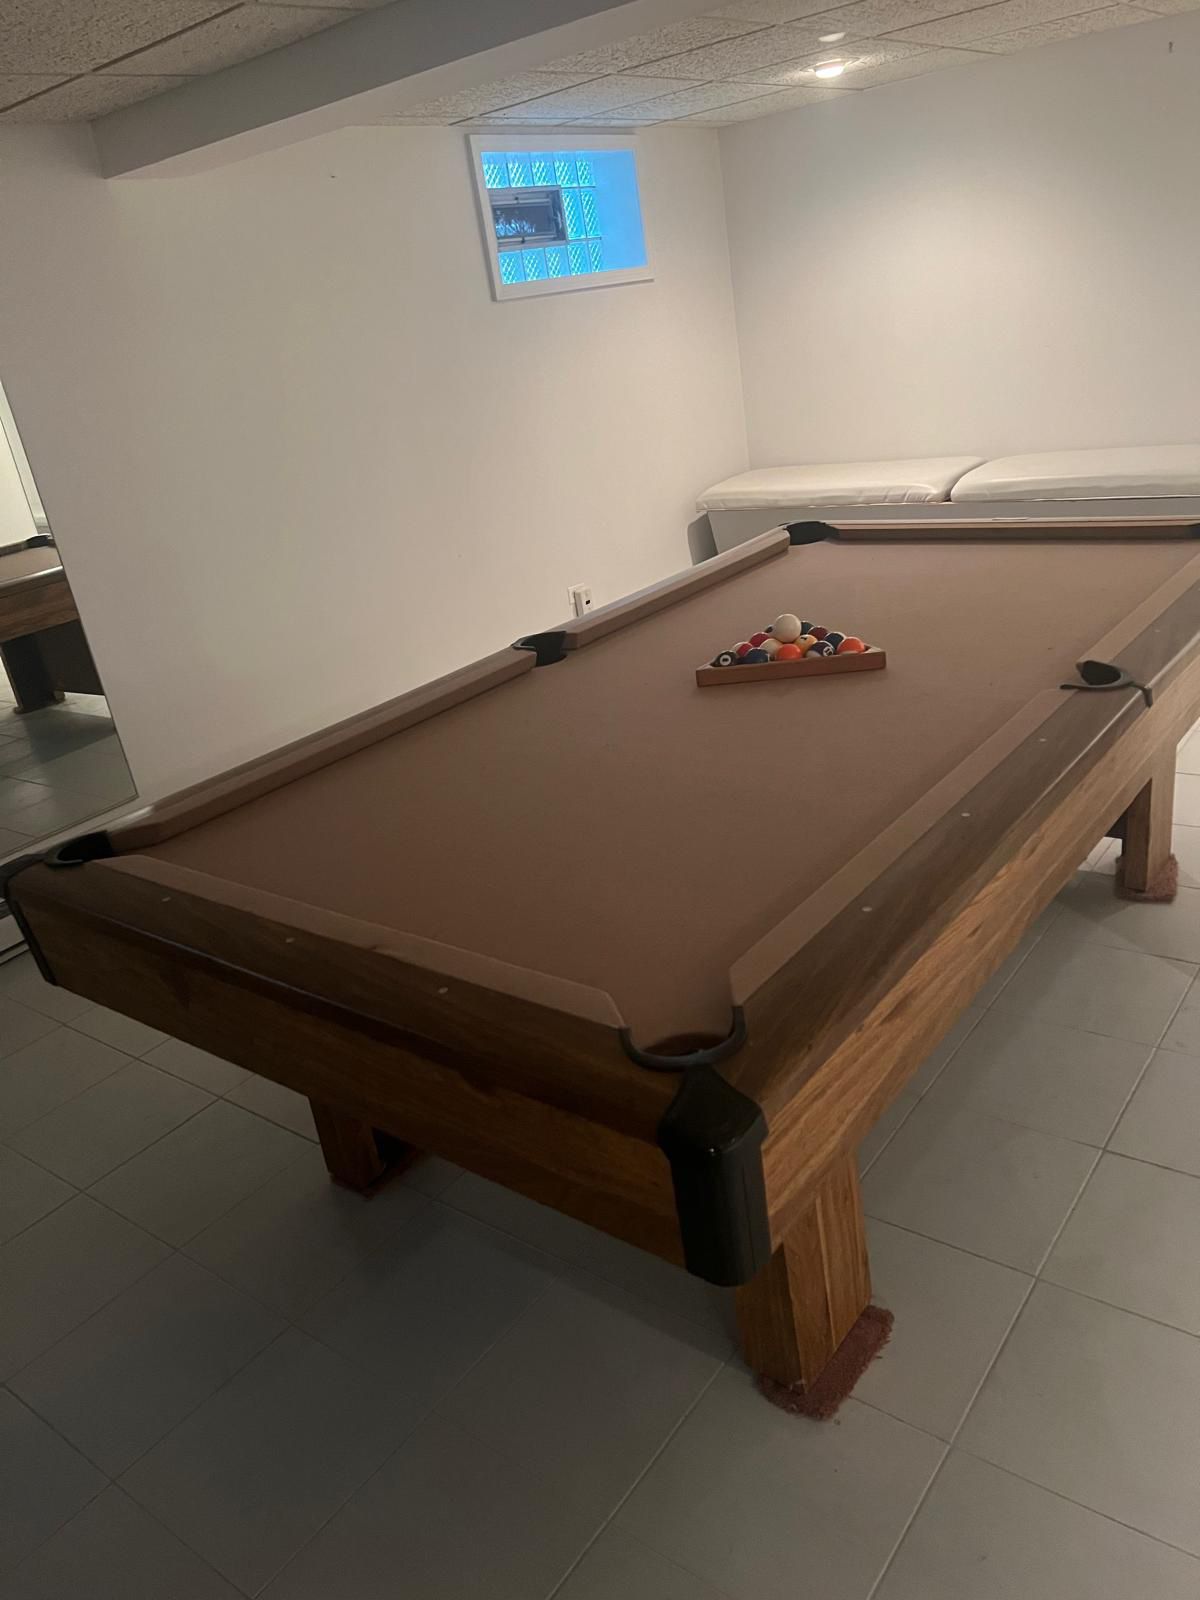 Pool Table—Bristol II  by Brunswick